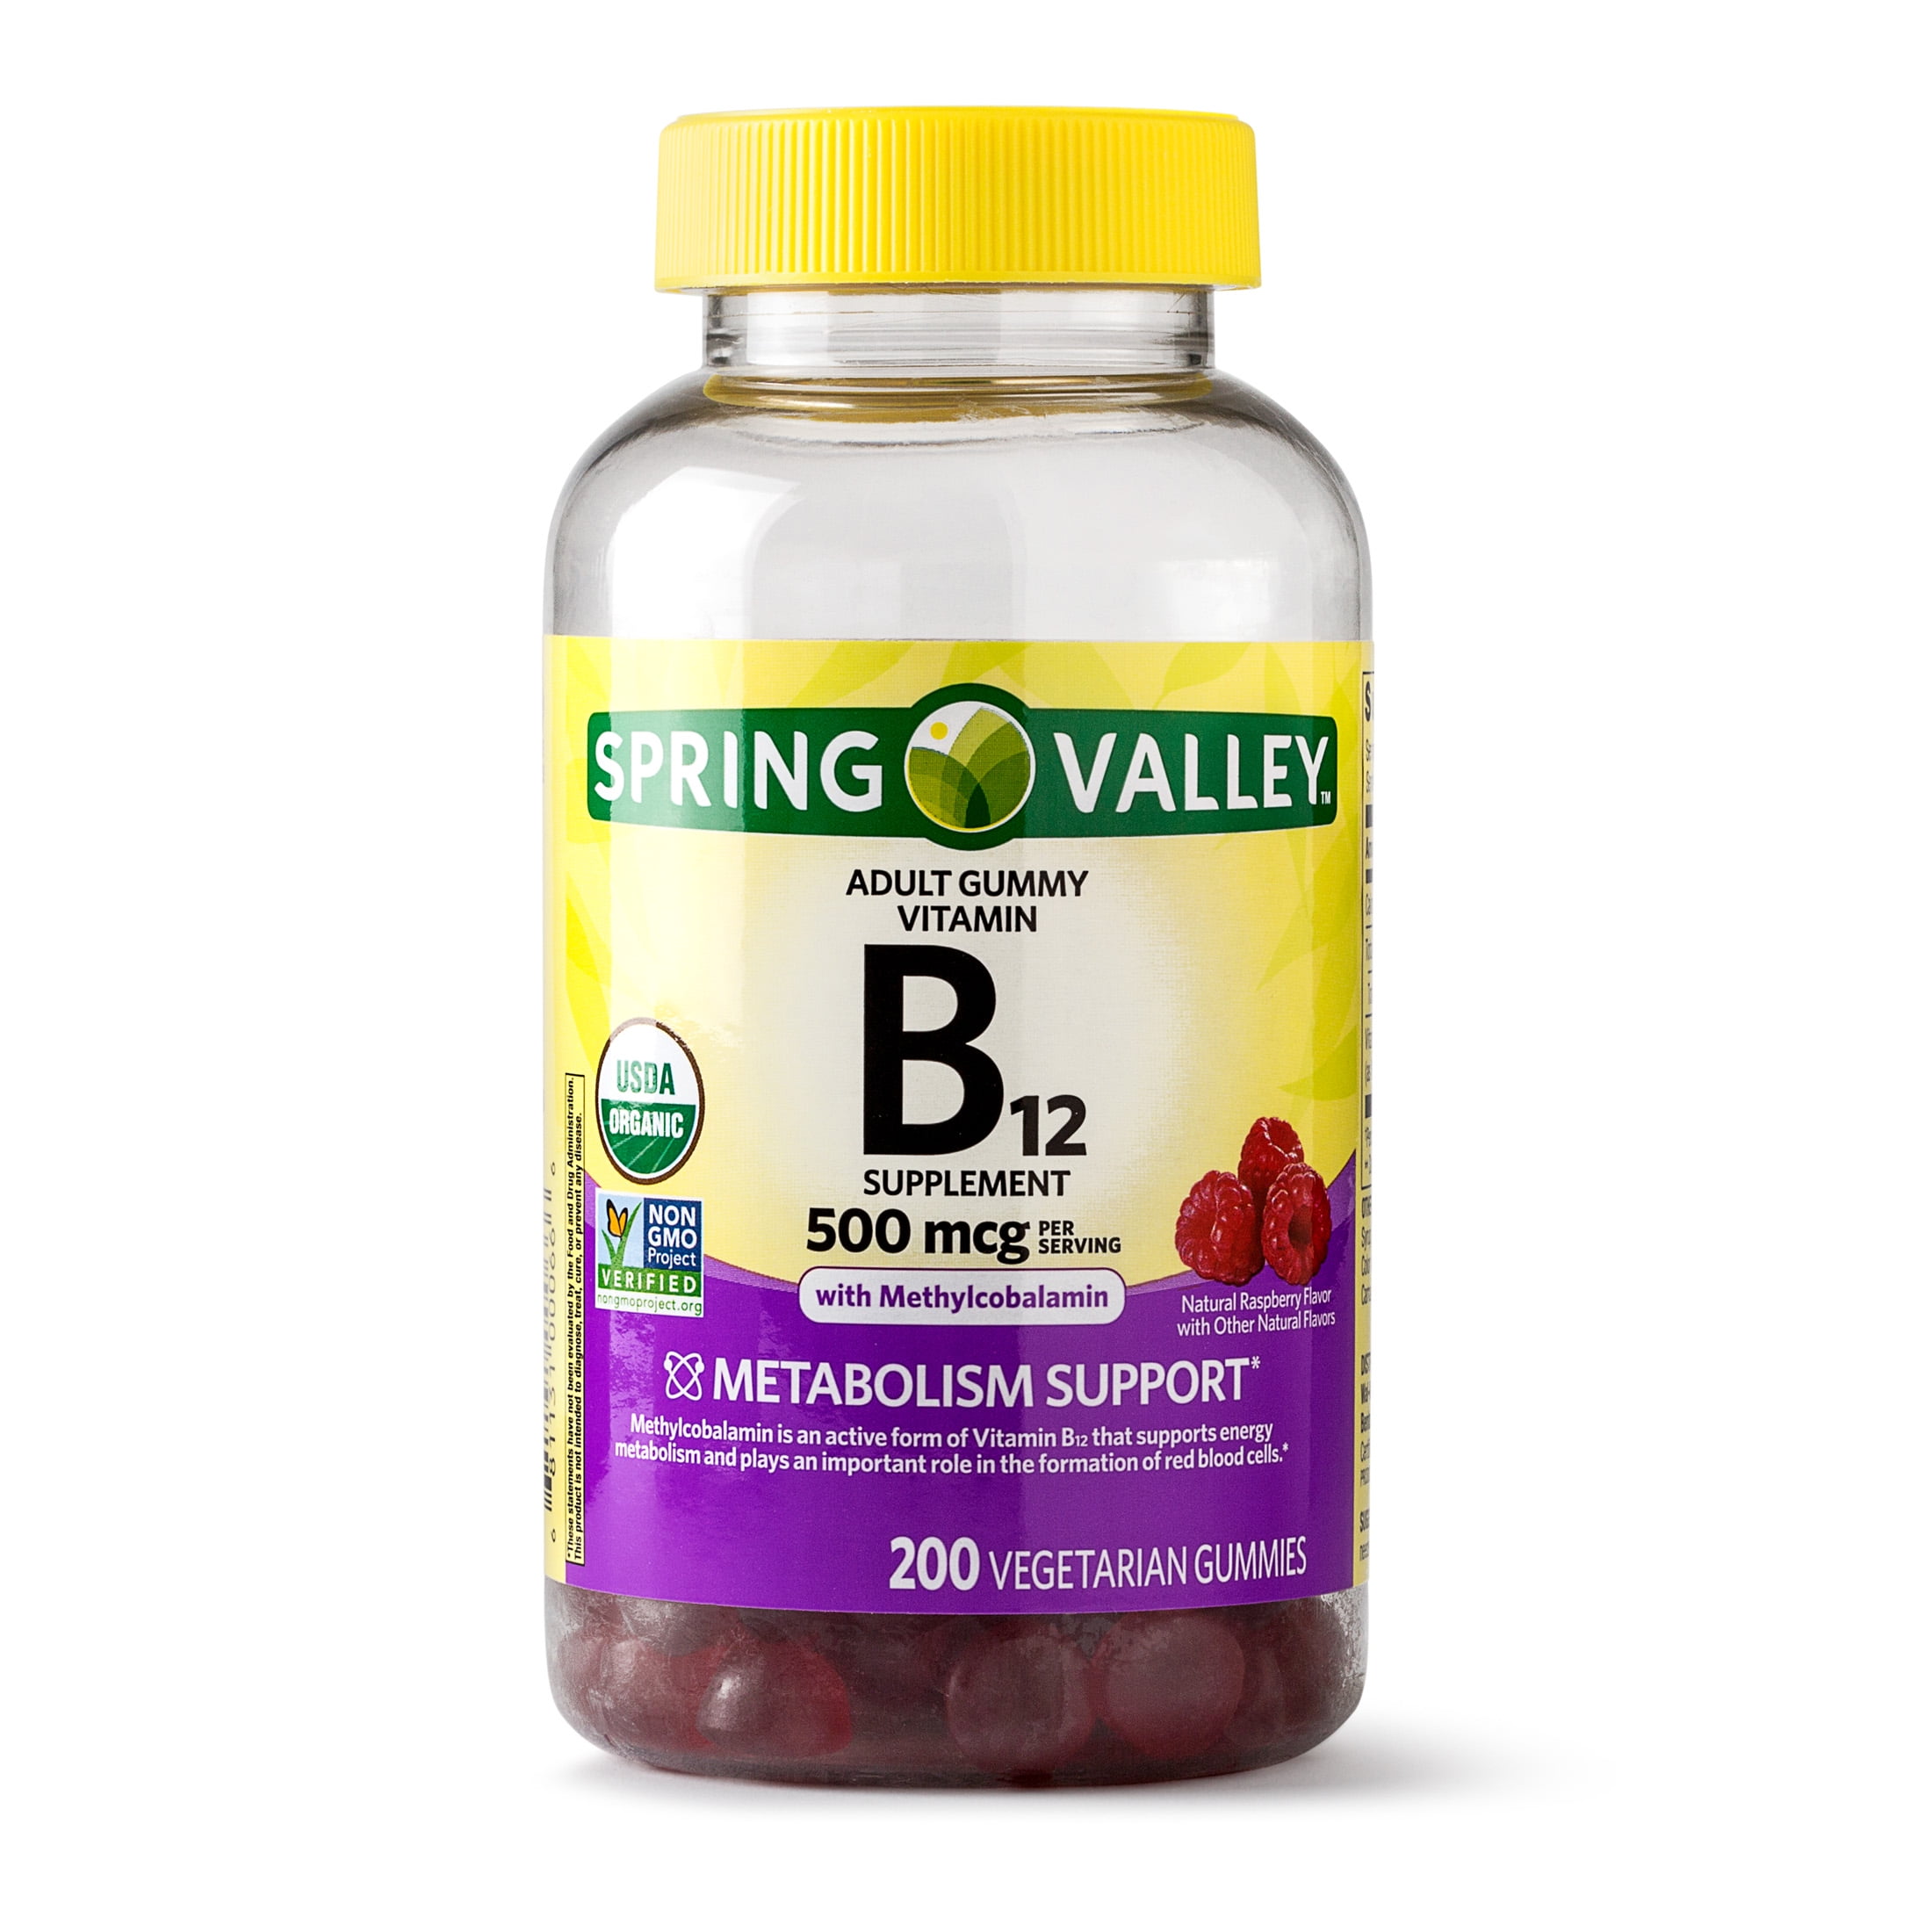 Spring Valley Vitamin B12 Gummy, 500 mcg